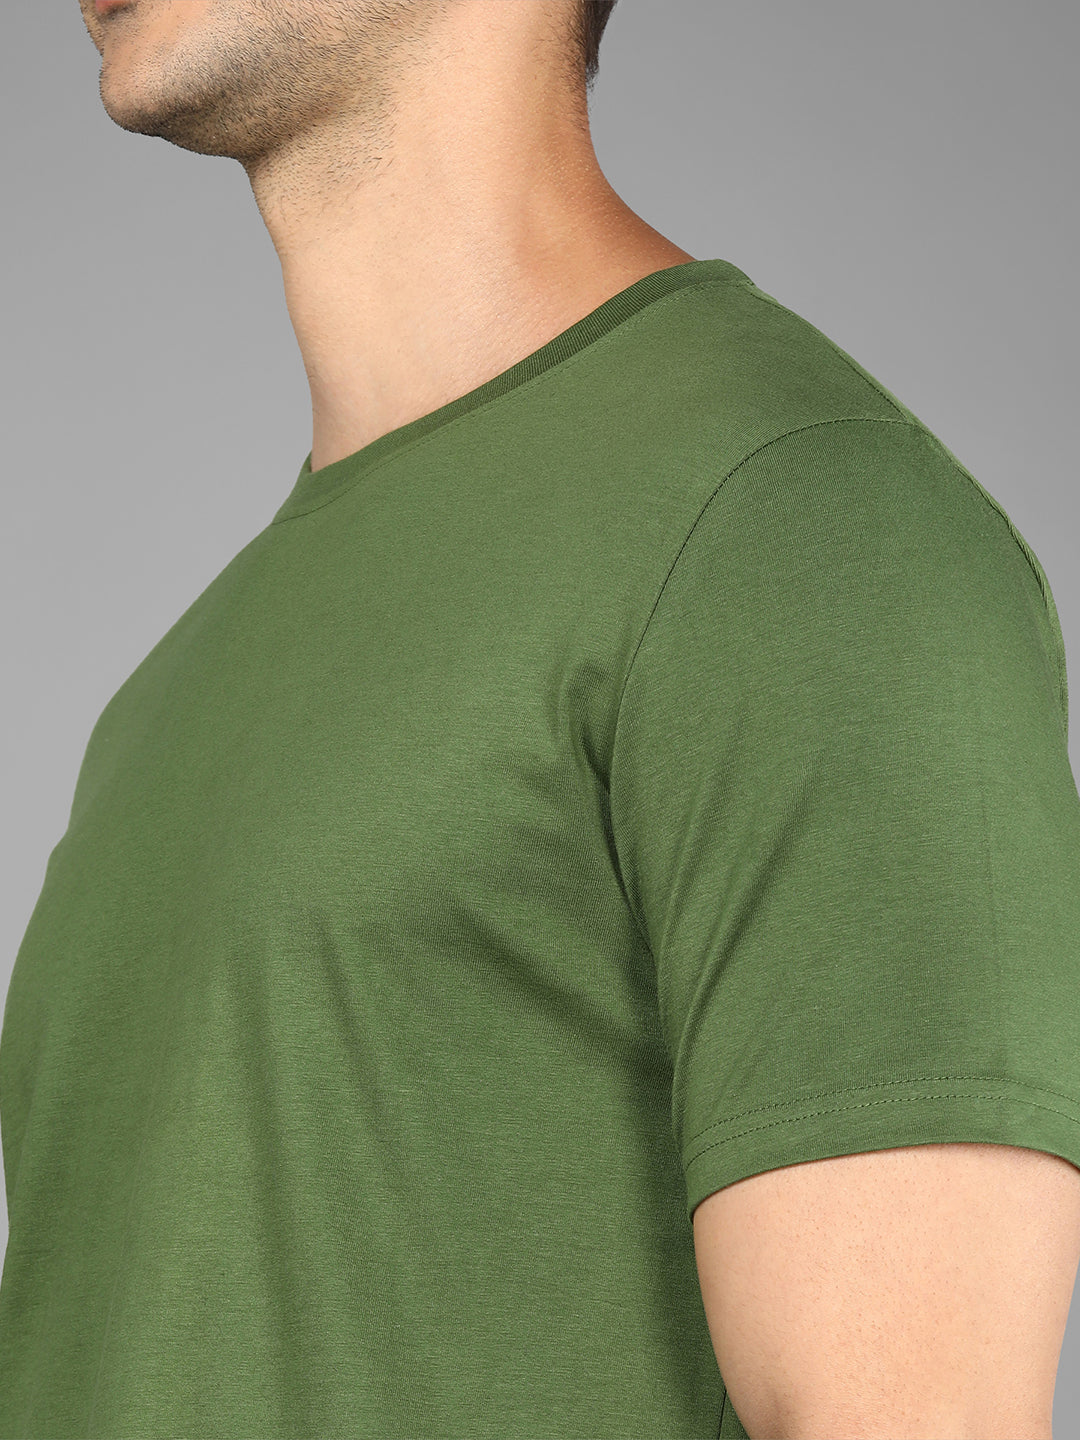 Joe Wick - Solid Men's T-Shirt - Dry Olive Green